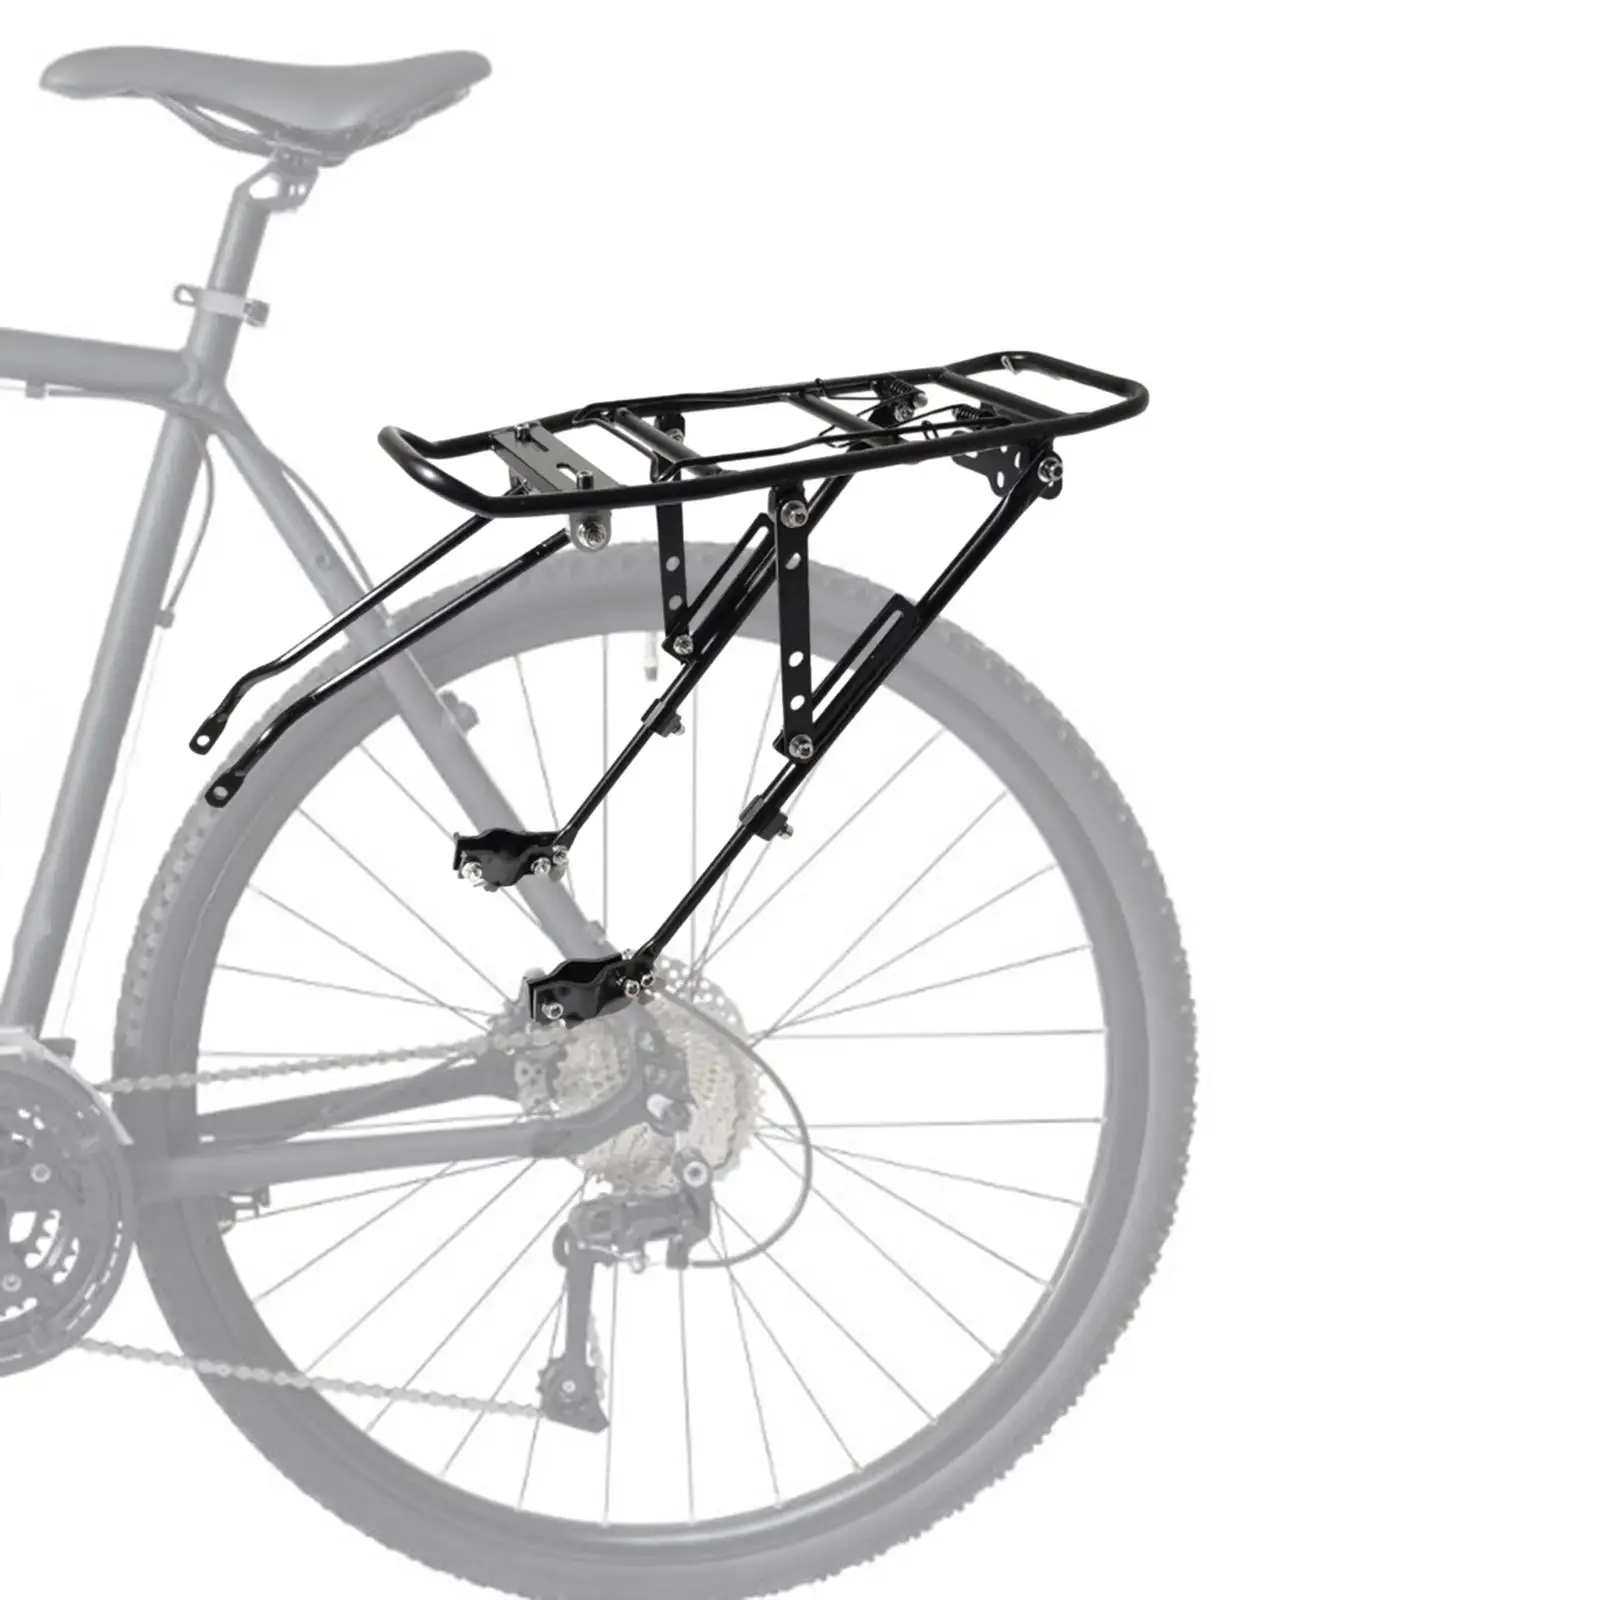 Rear Bike Rack Bicycle Luggage Carrier Rack for Outdoor Biking Mountain Bike